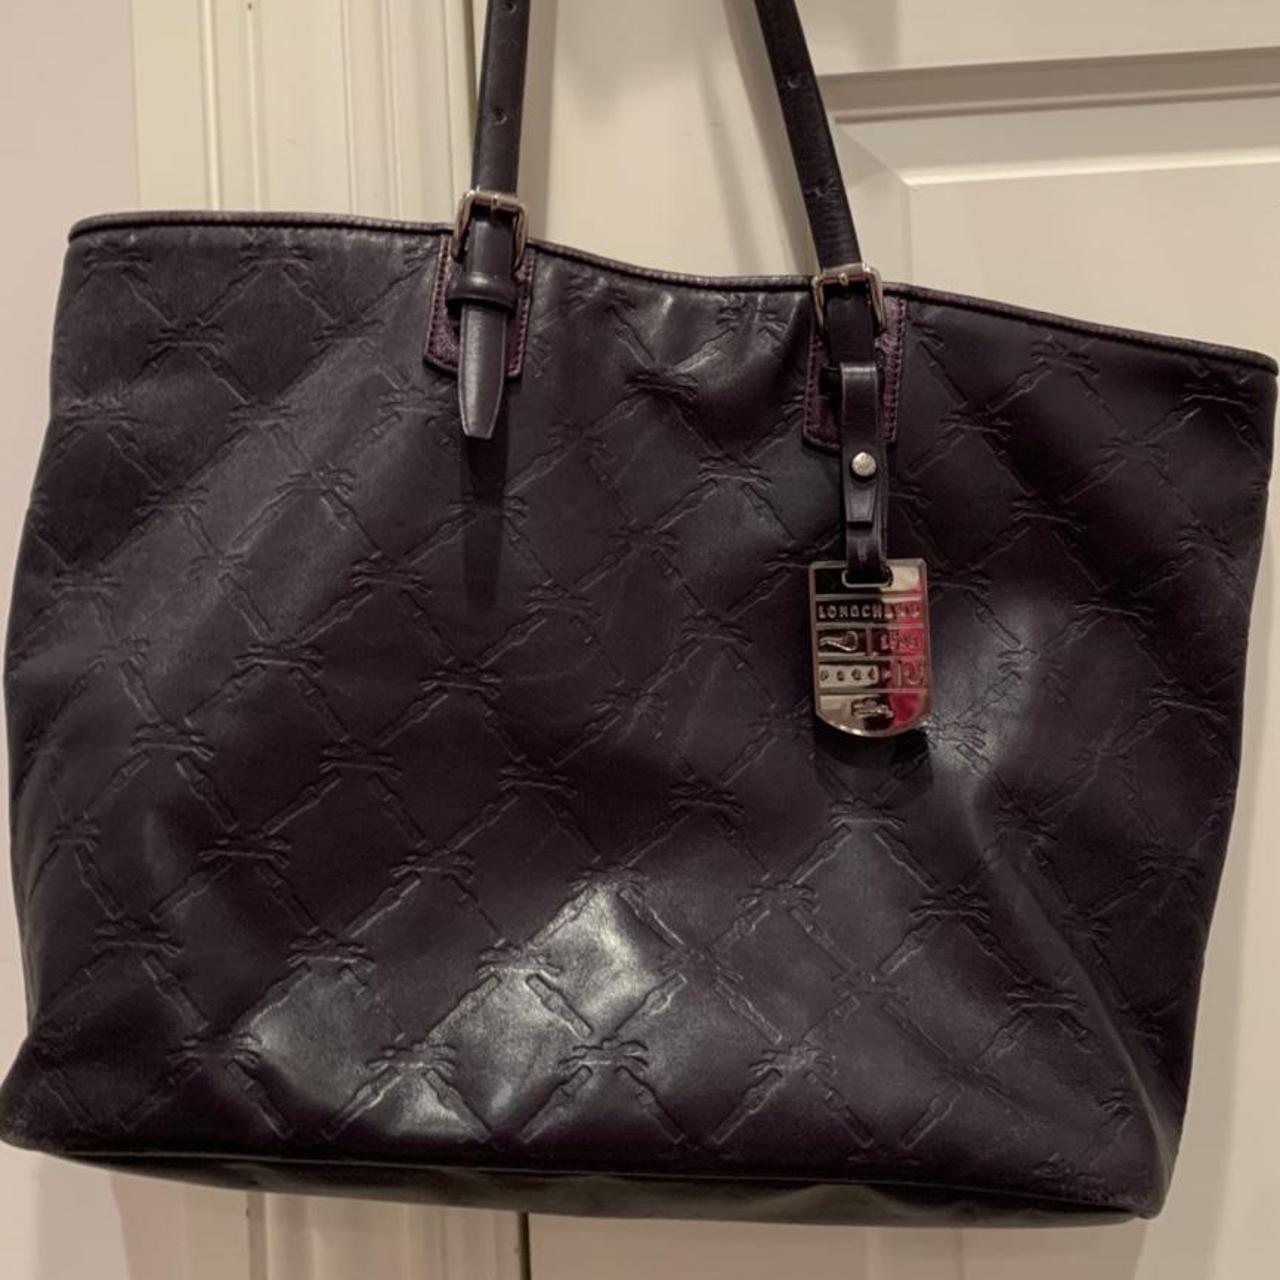 Longchamp Other Handbags | Mercari